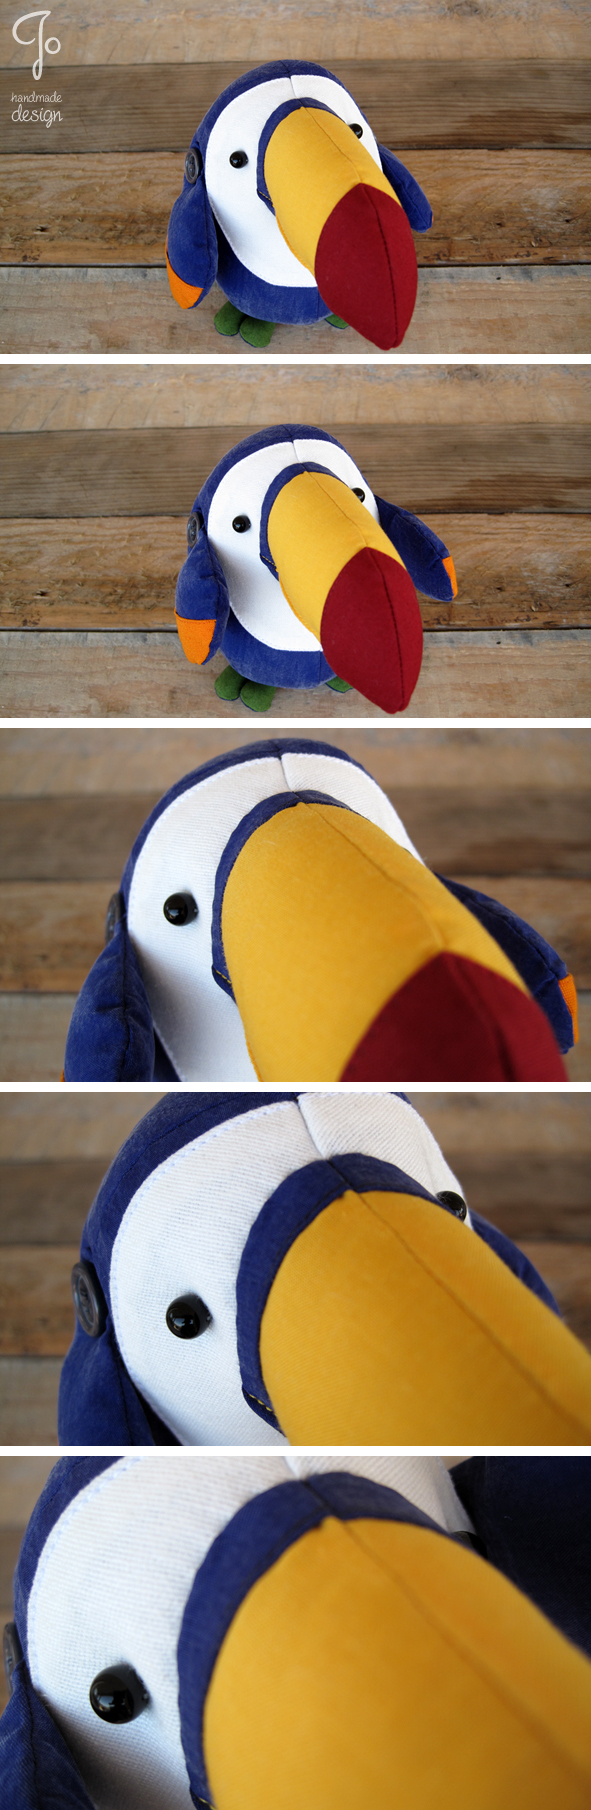 puppet toucan peluche Jo handmade design handmade